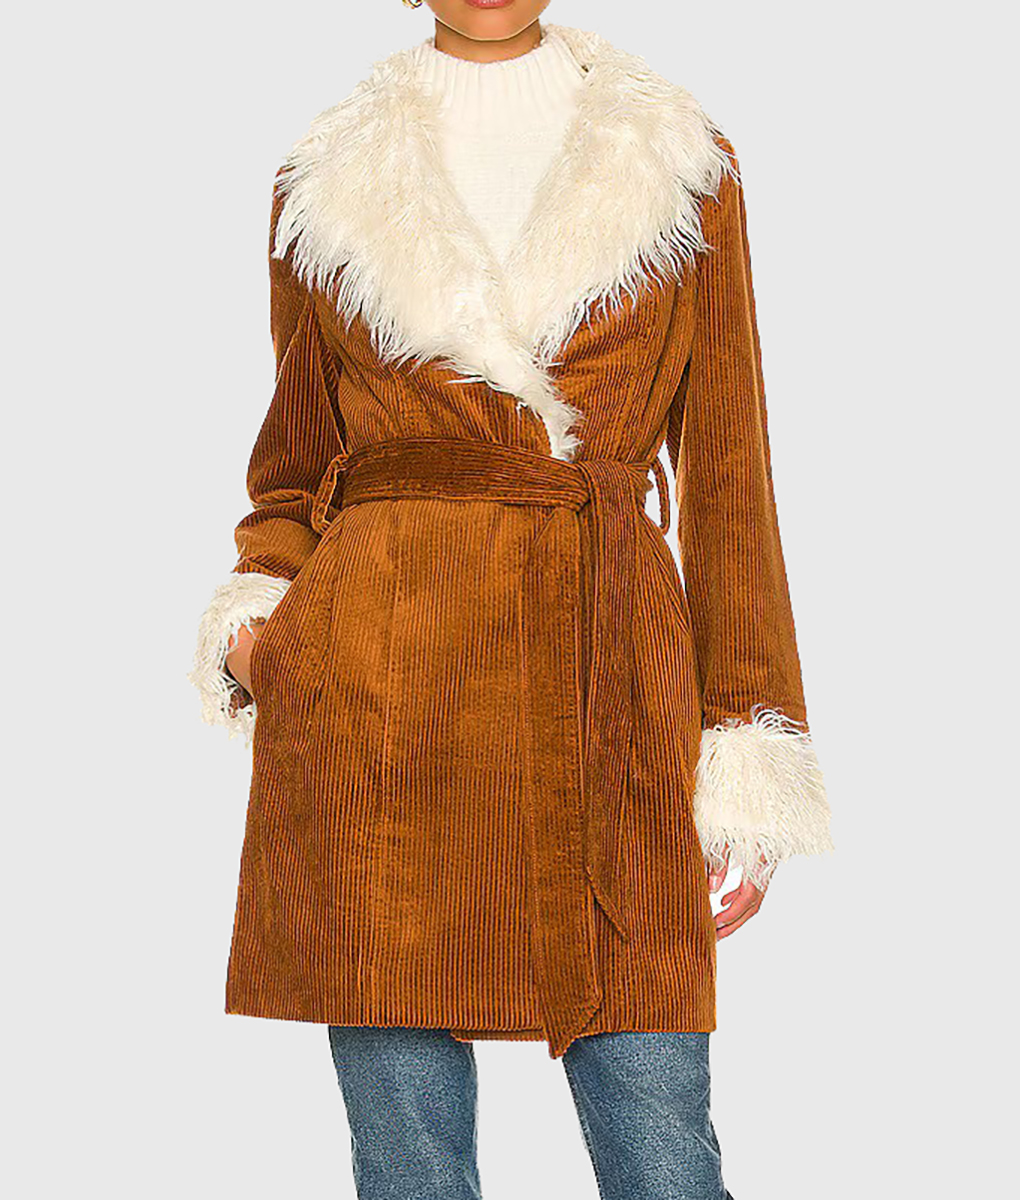 Nicola Coughlan Big Mood Suede Leather Brown Fur Coat (1)